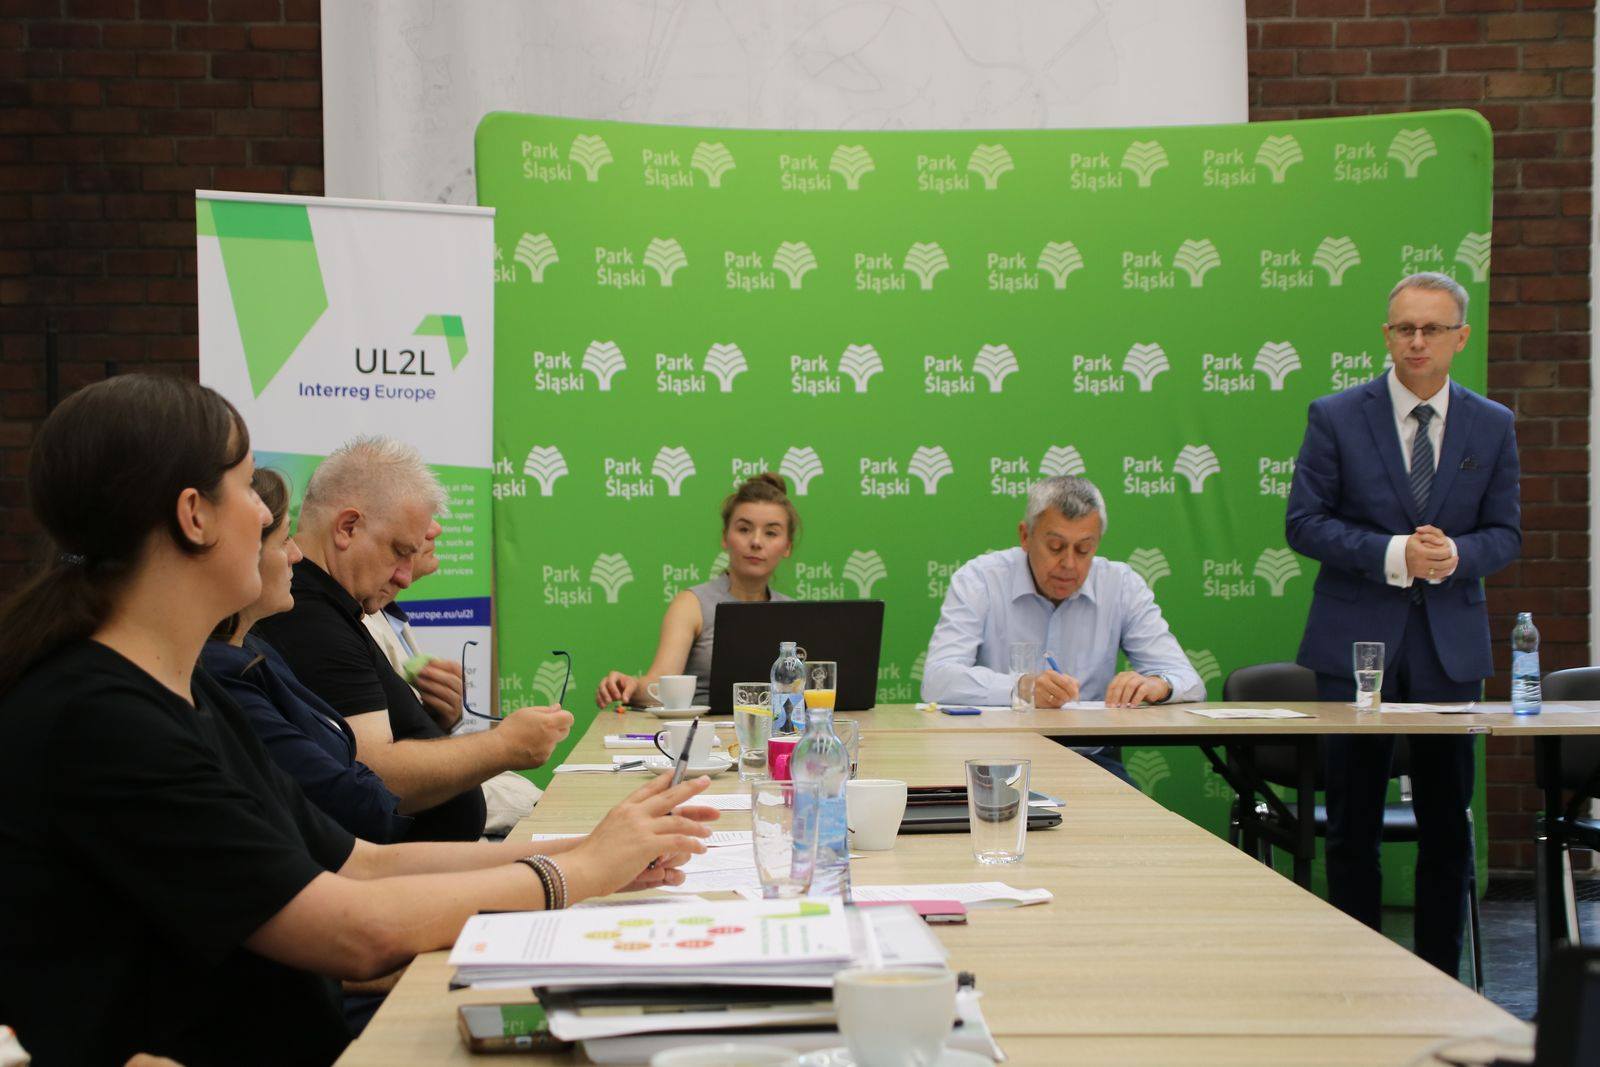 UL2L Silesia Park Stakeholder Meeting 